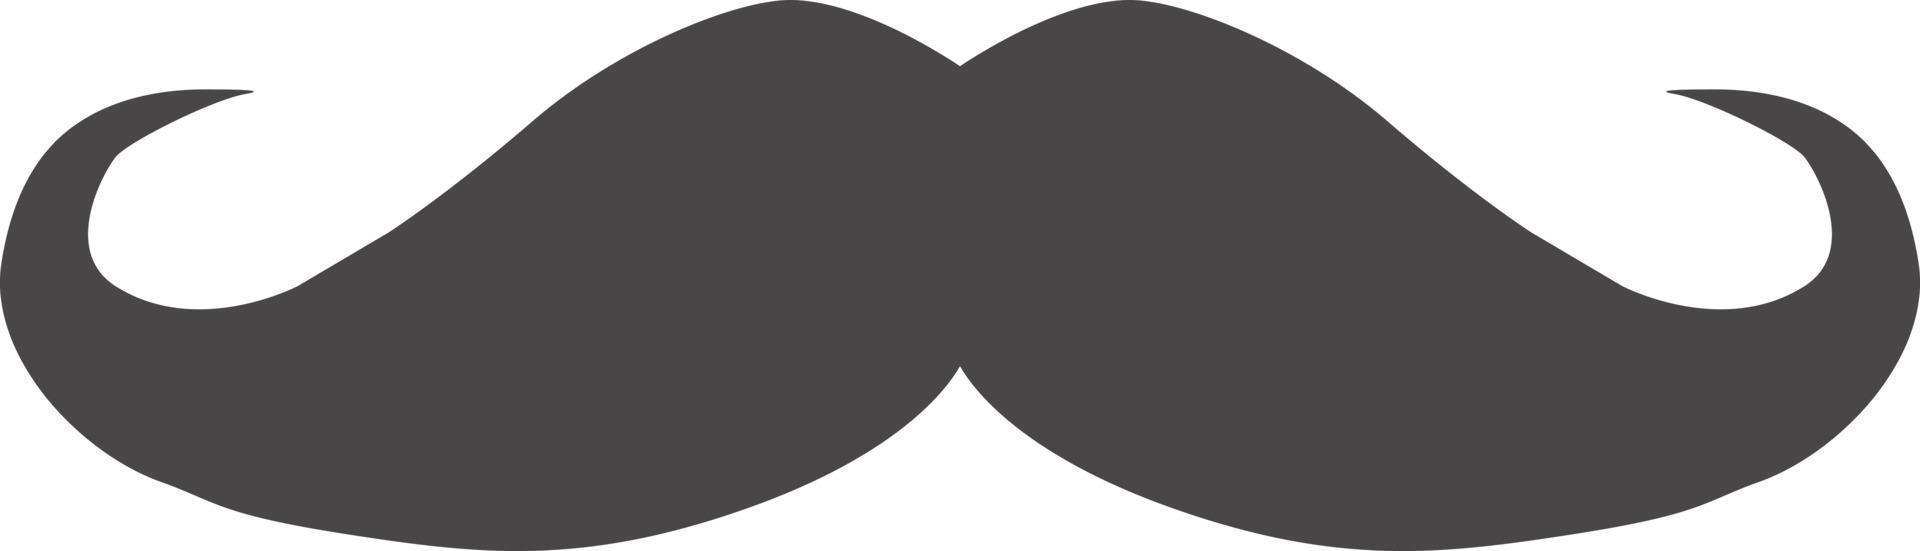 Italy mustache icon. Italy mustache symbol. flat style. vector